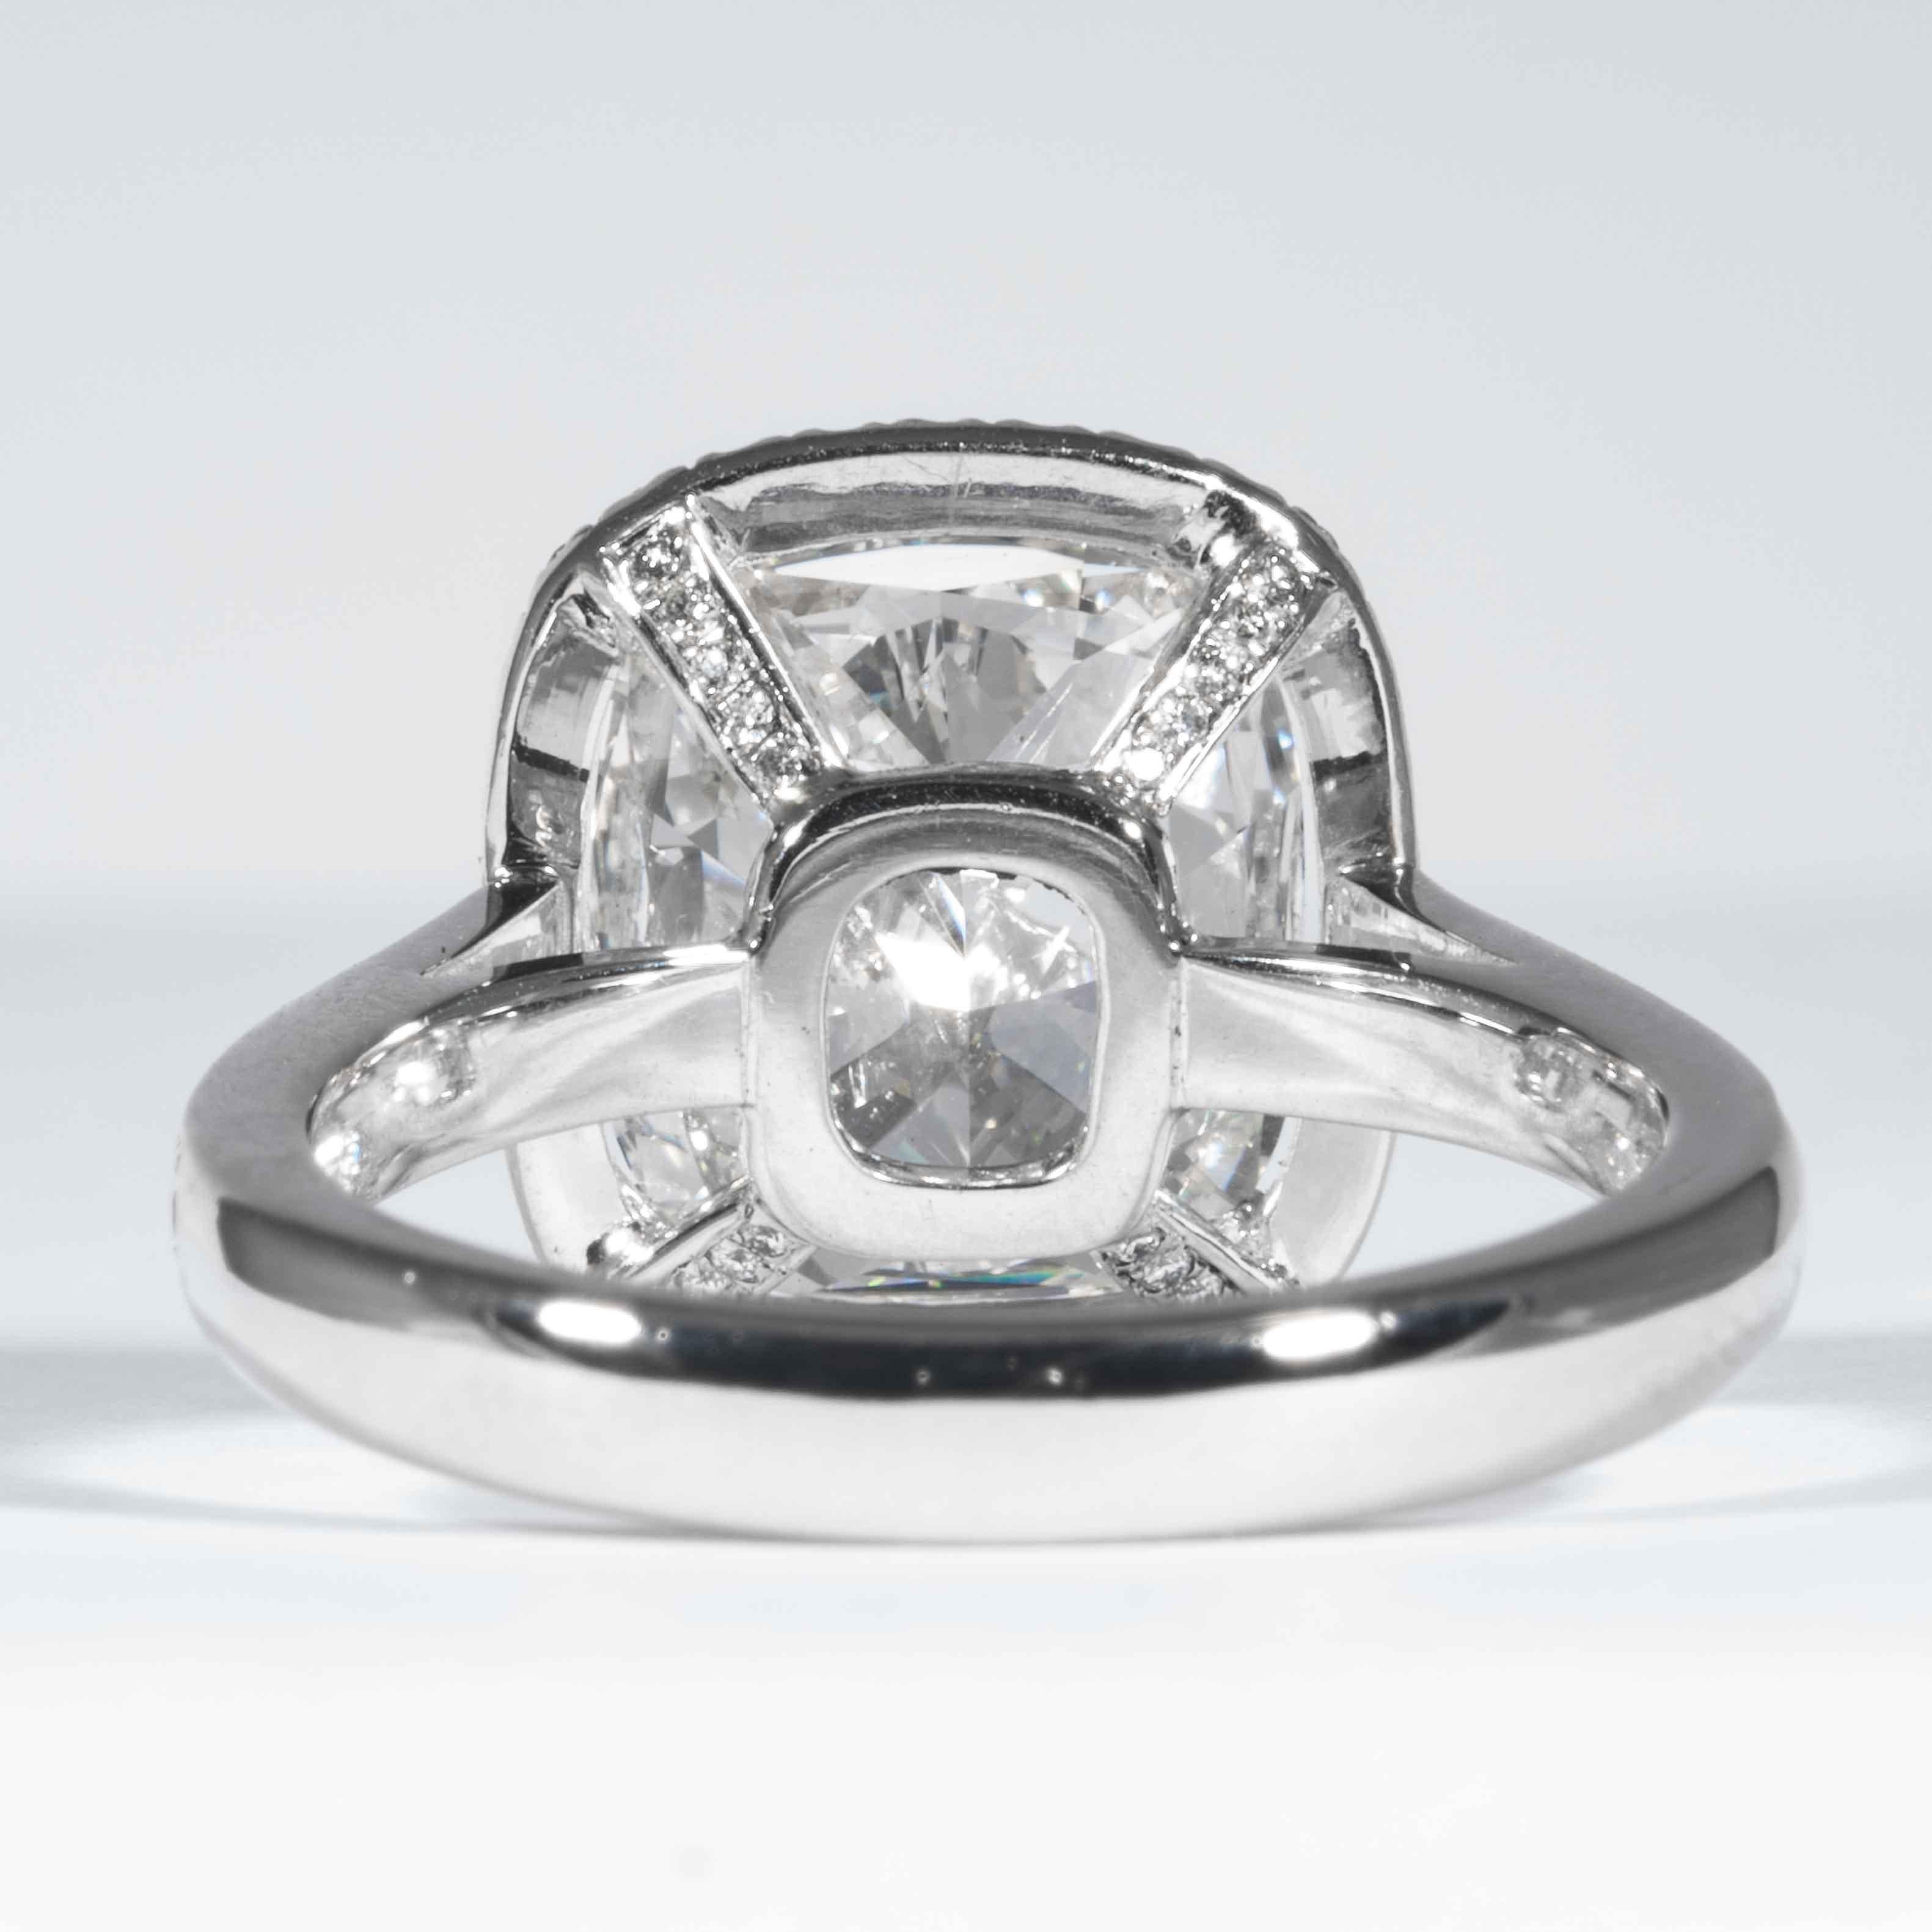 Women's Shreve, Crump & Low GIA Certified 4.01 Carat I VVS2 Cushion Cut Diamond Ring For Sale